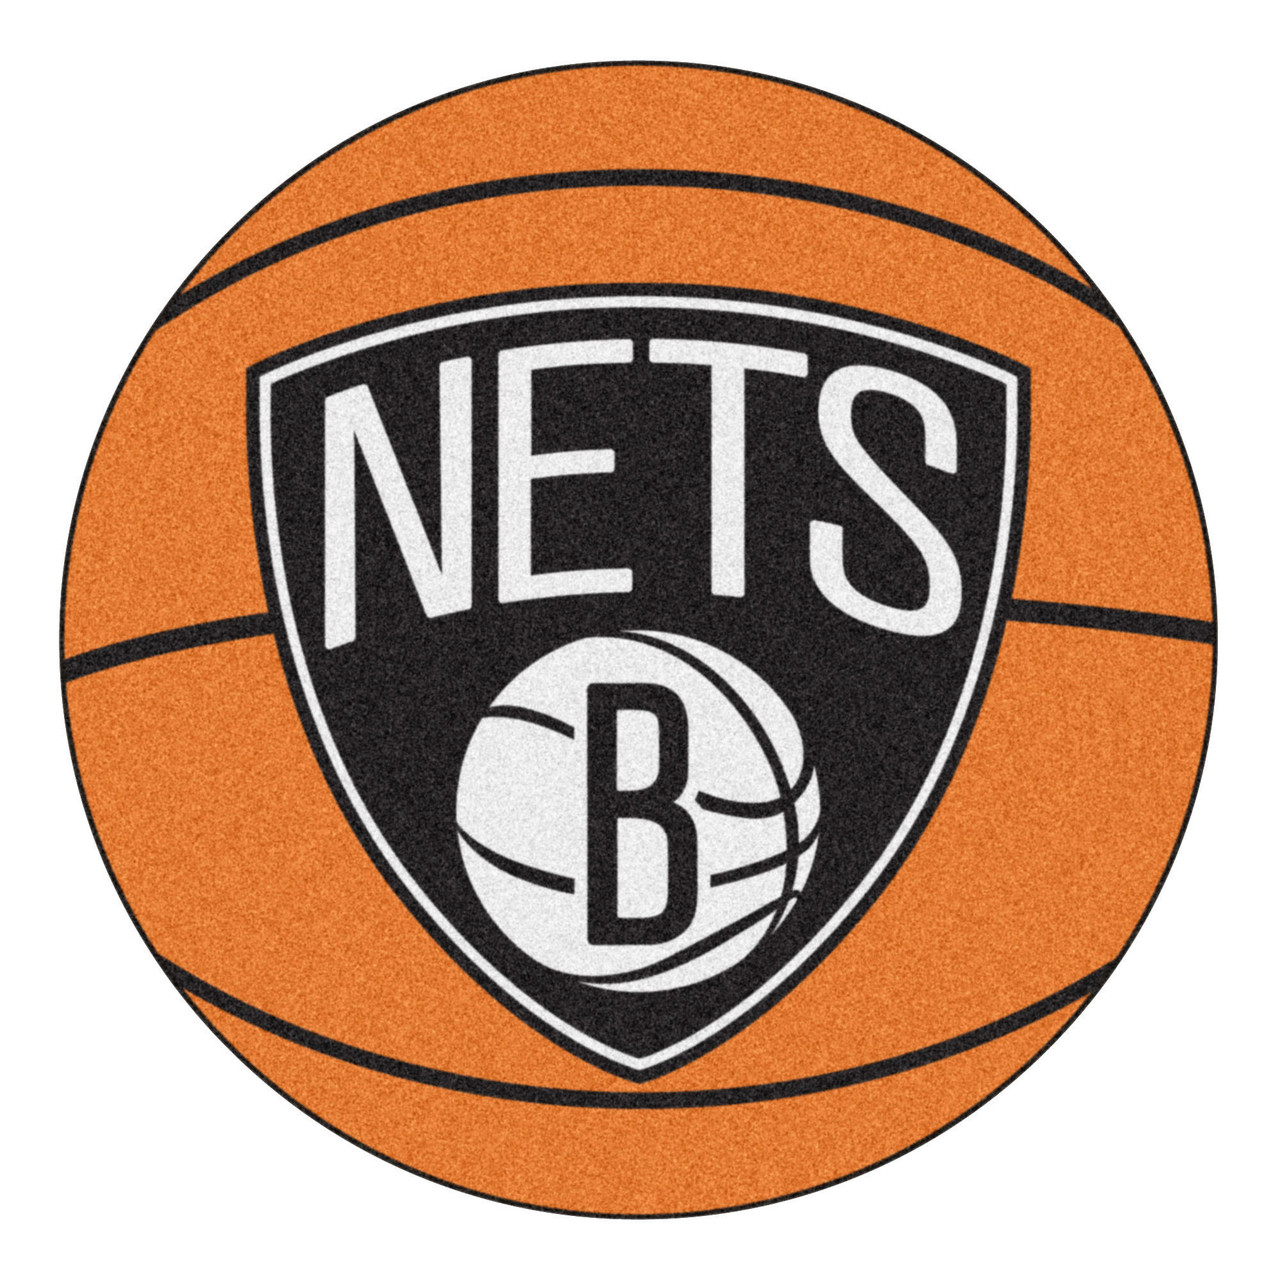 Brooklyn Nets Basketball 